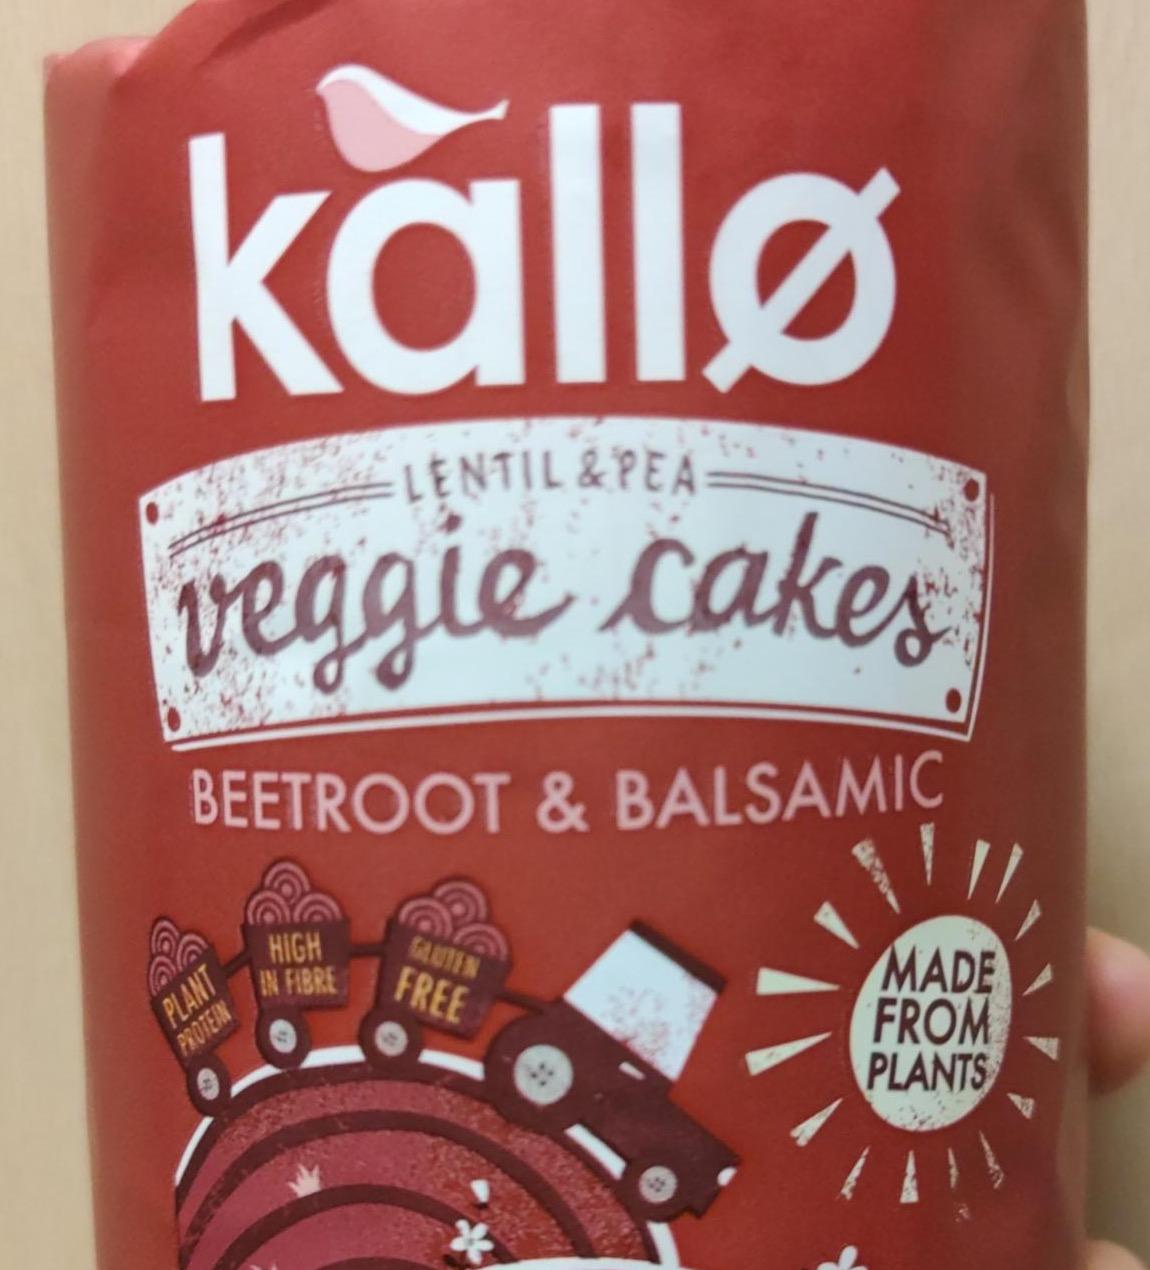 Képek - Lentil & pea veggie cakes Beetroot & balsamic Kallo